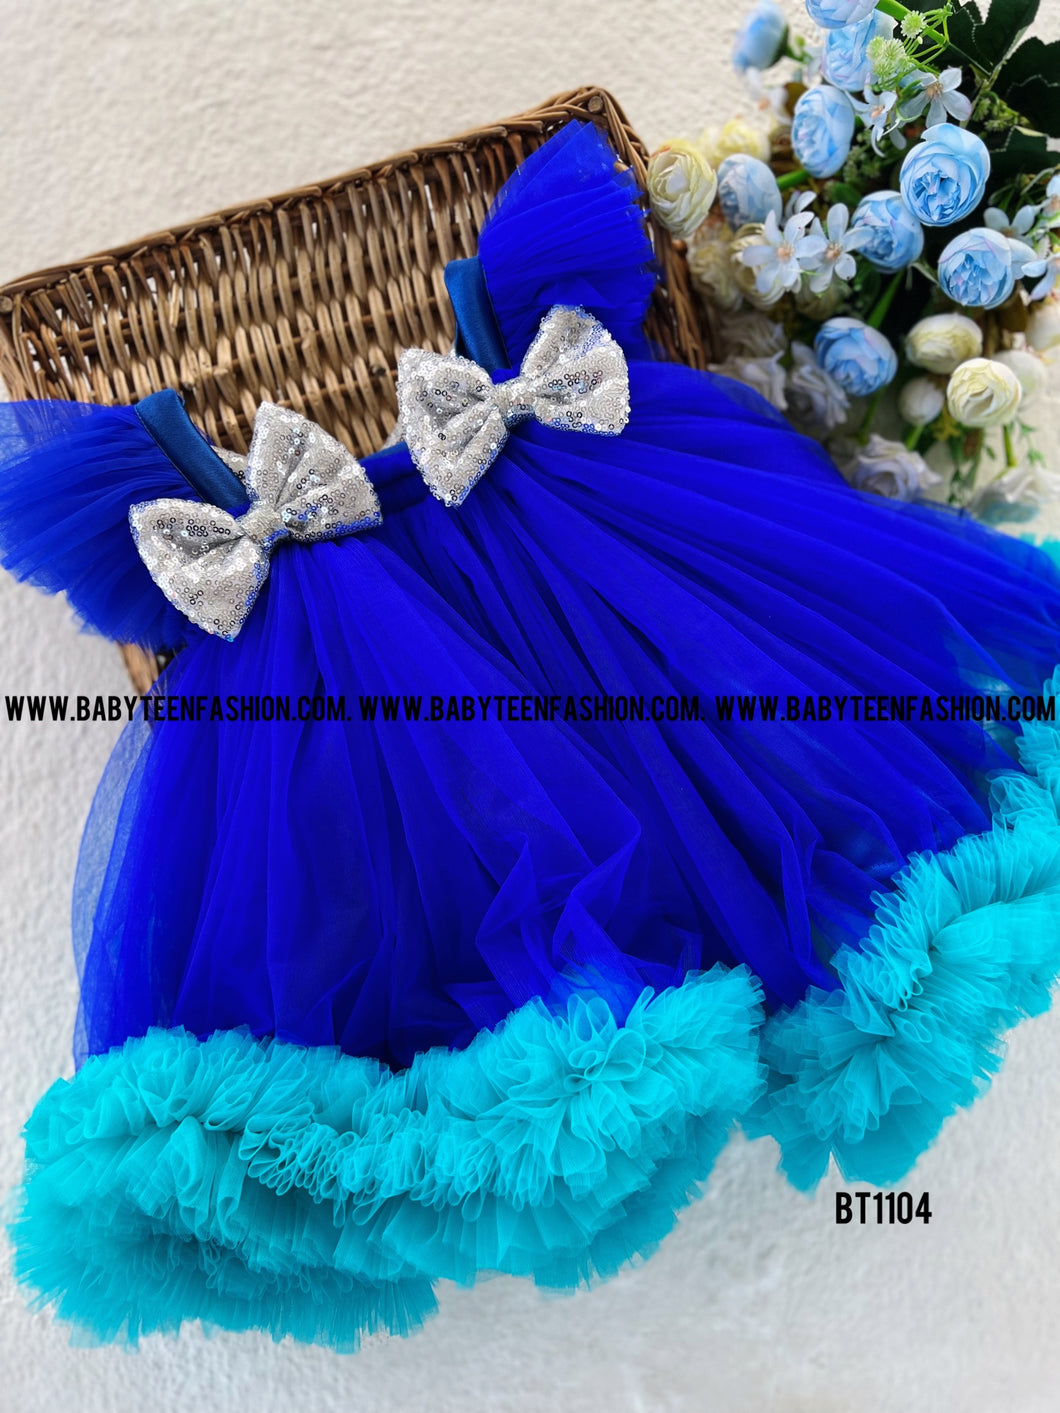 BT1104 Ocean Dream Dress – Where Elegance Meets Whimsy